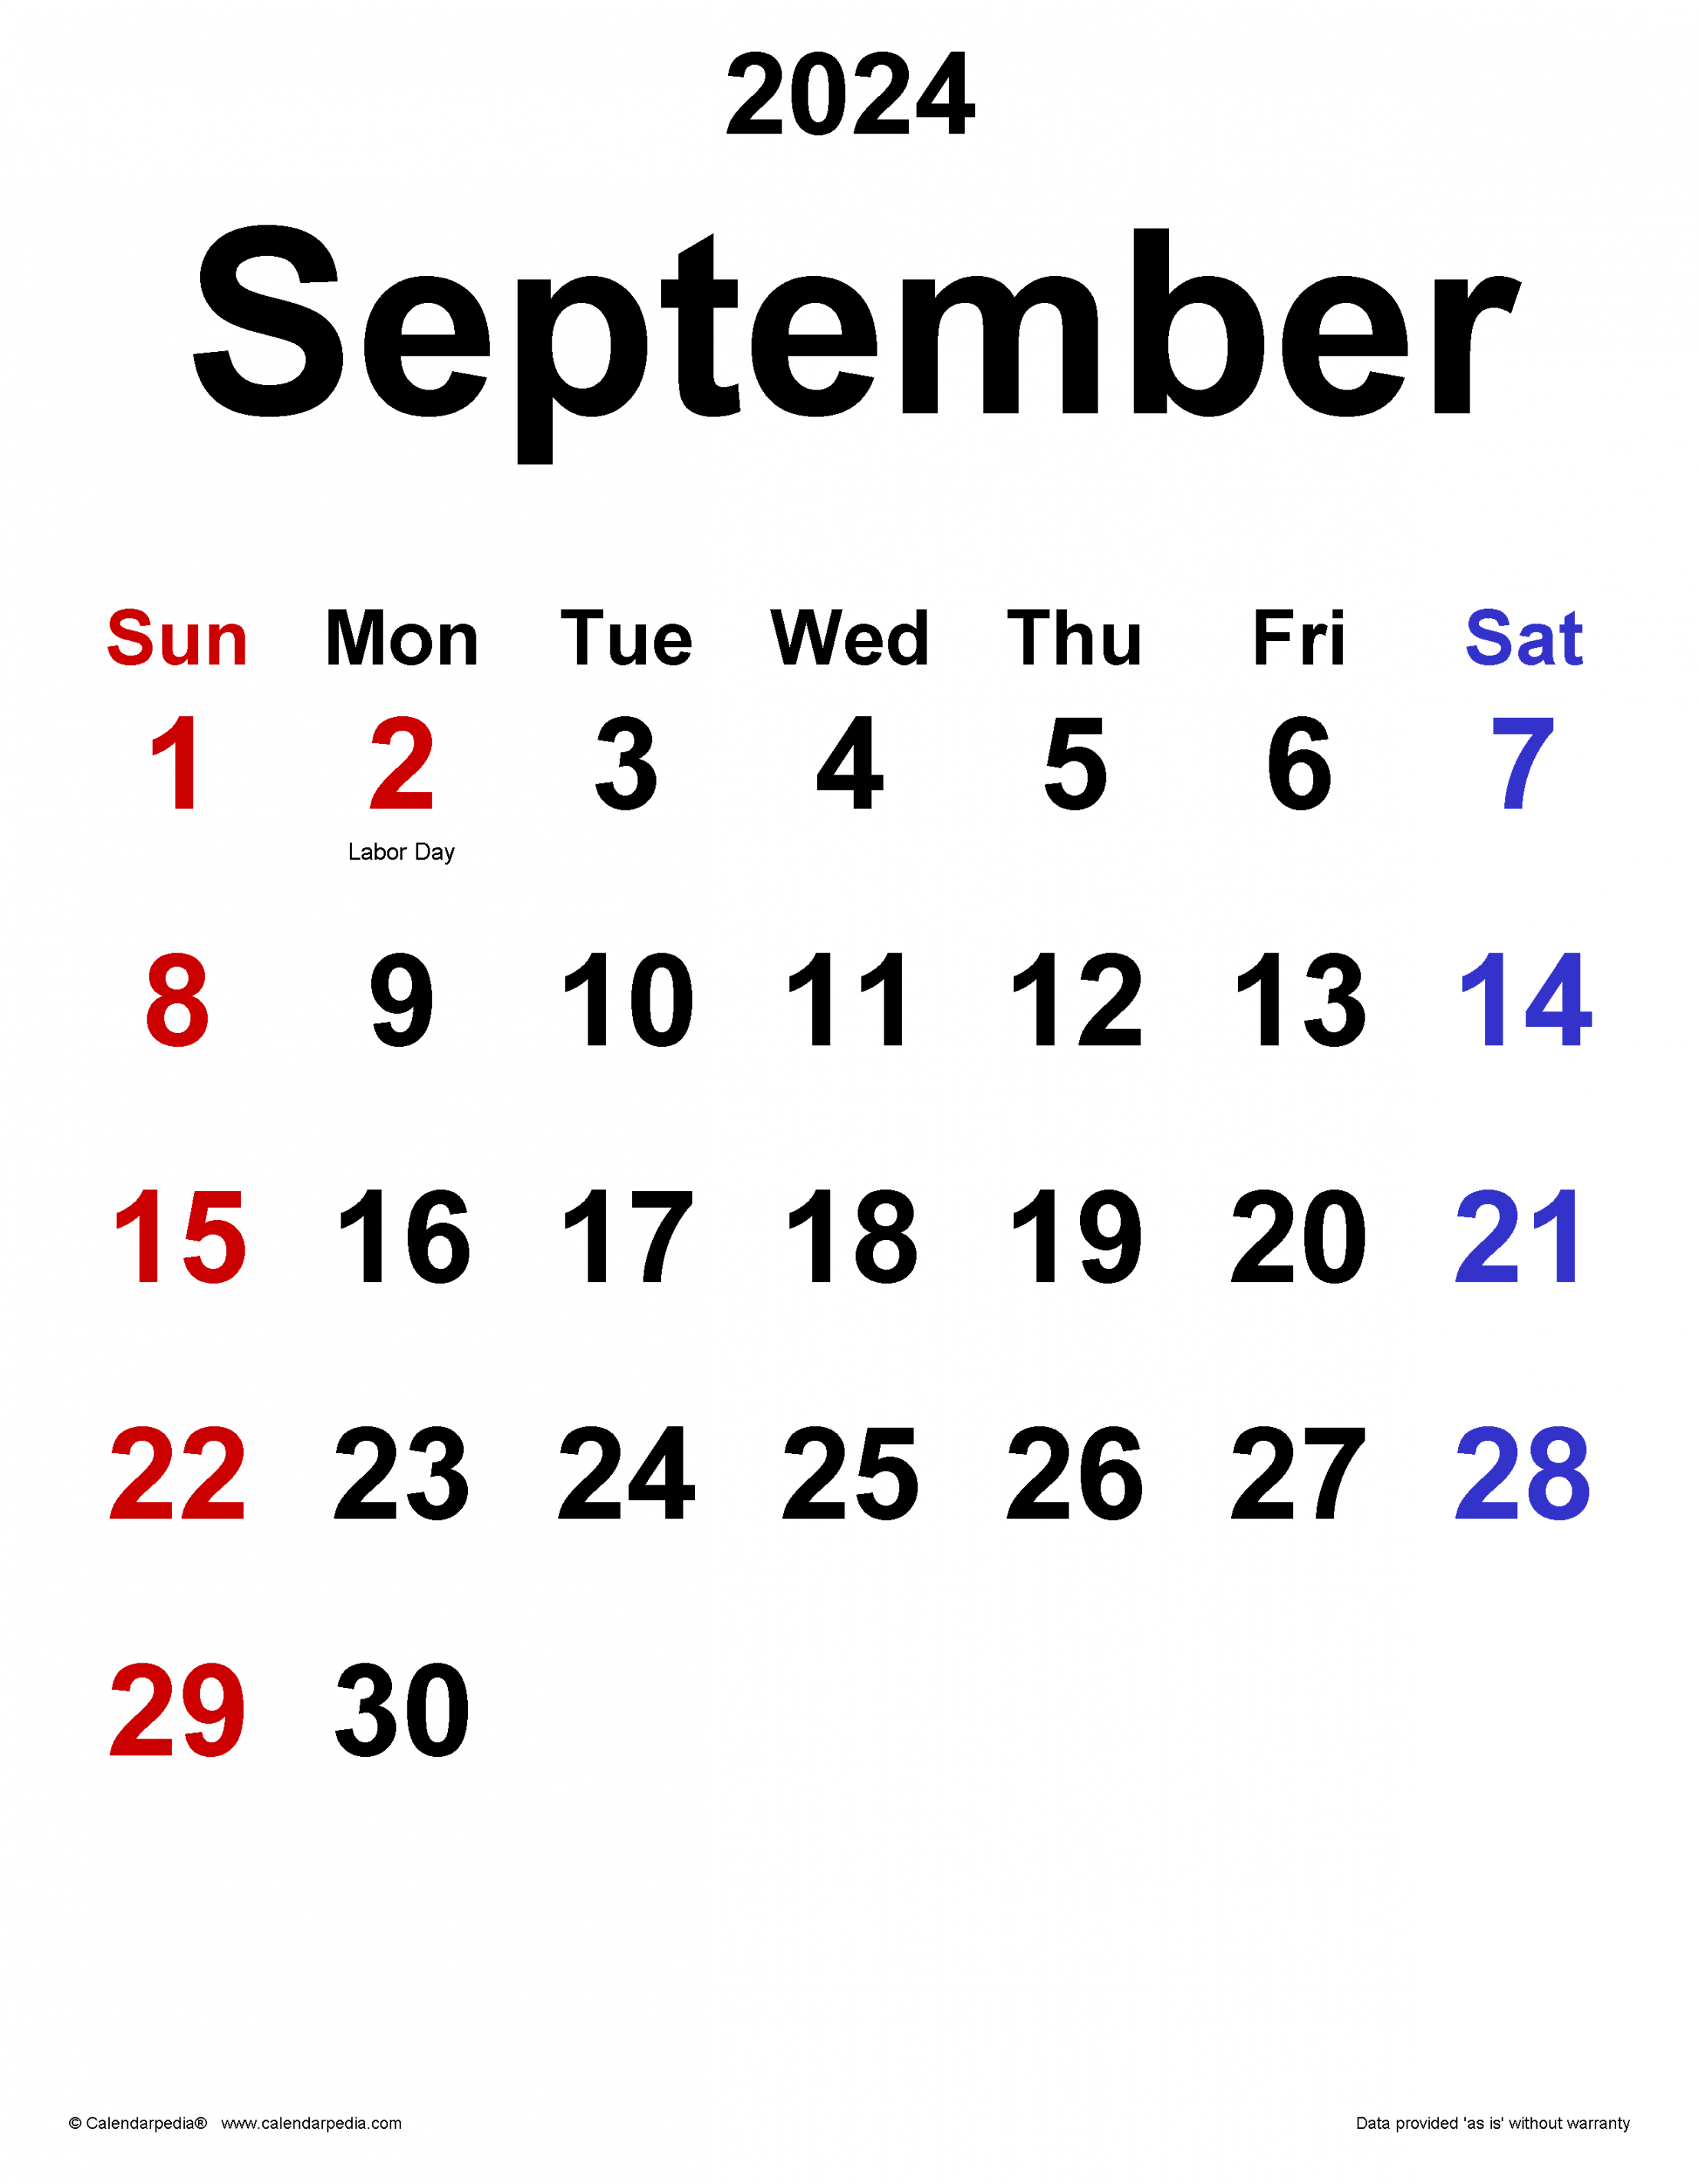 www.calendarpedia